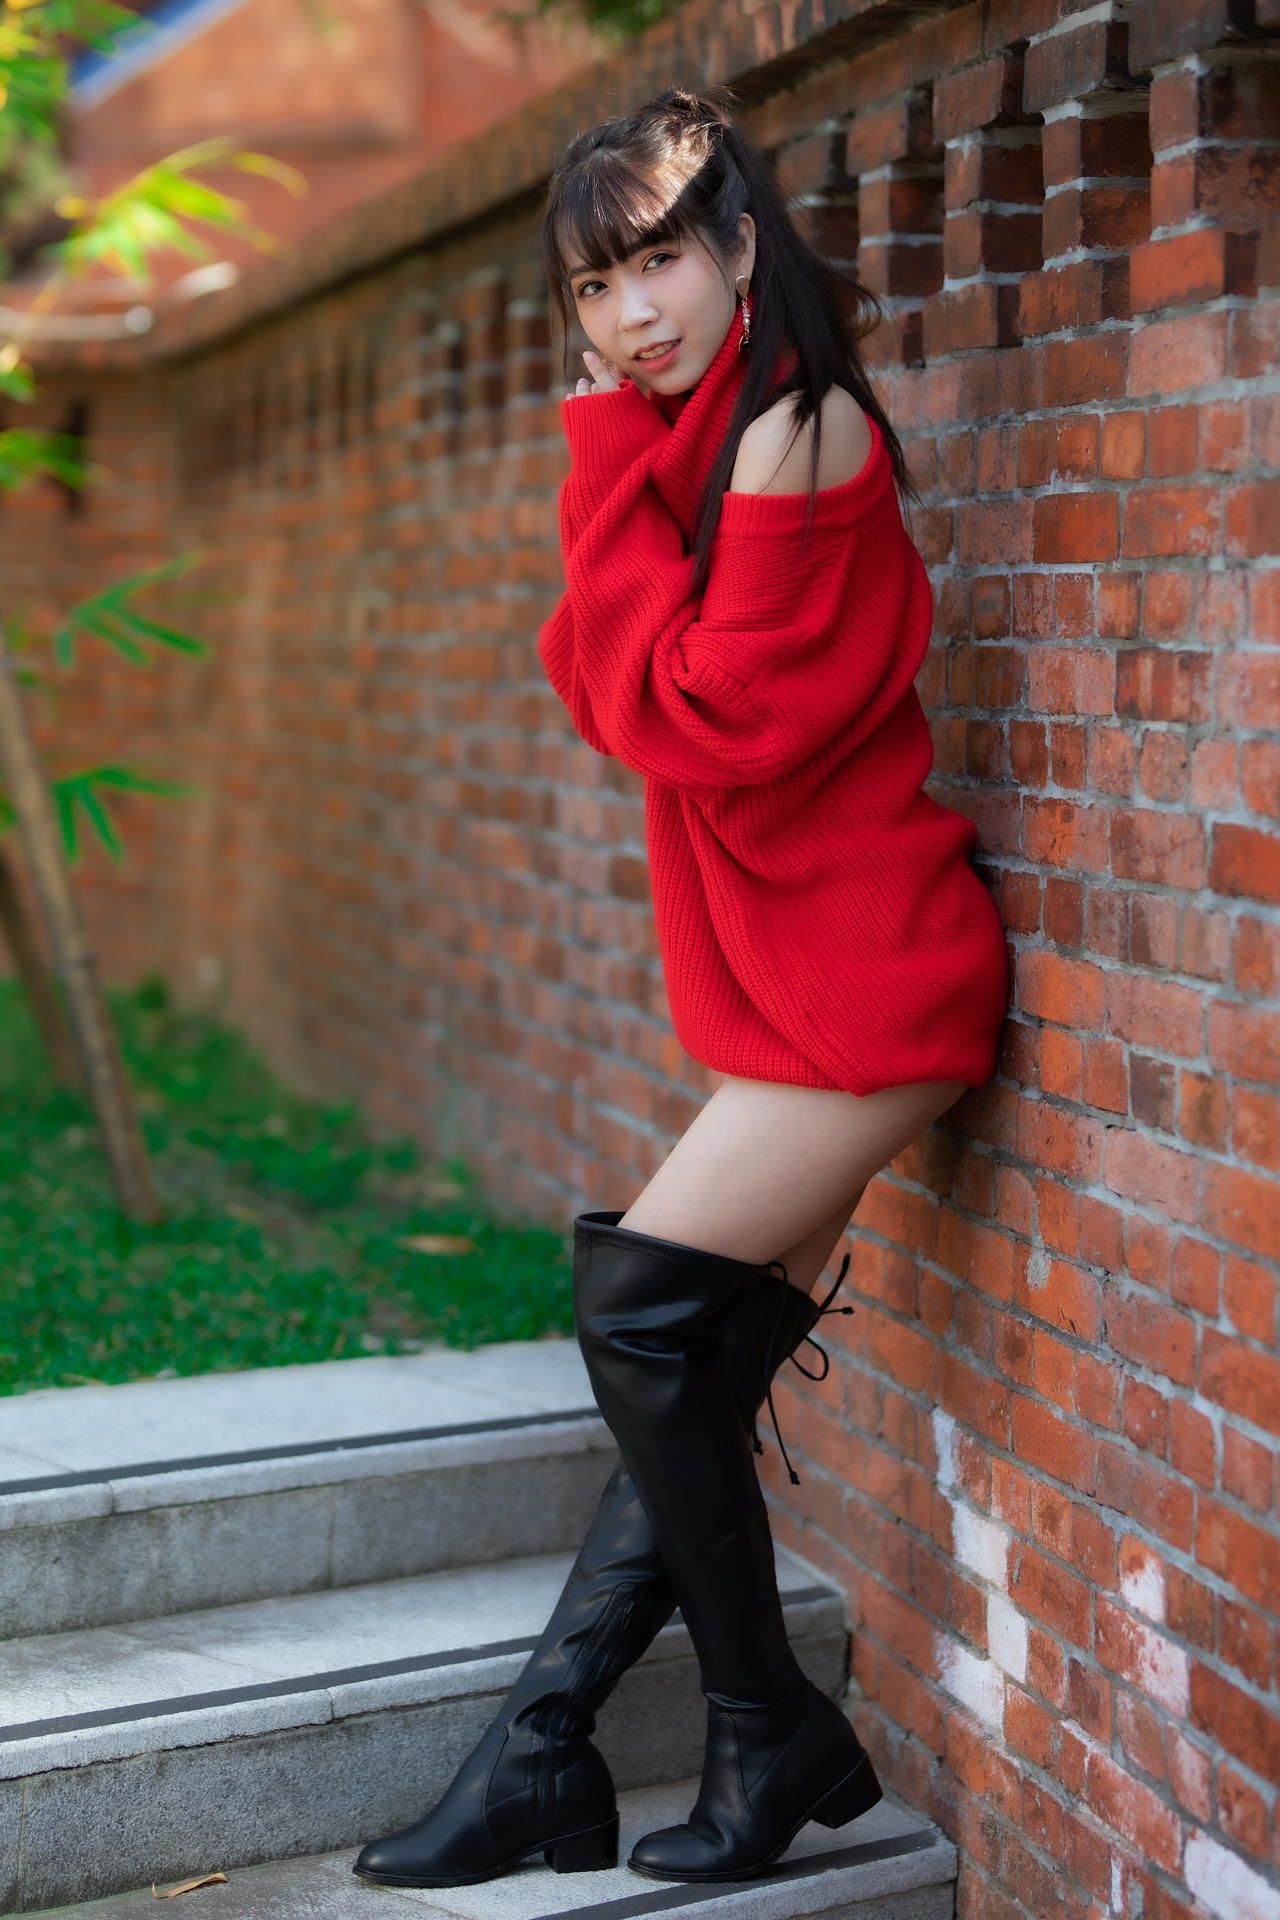 Asian Model Women Long Hair Dark Hair Boots Red Pullover Wall Bricks Serene Liu Knee High Boots 1280x1920